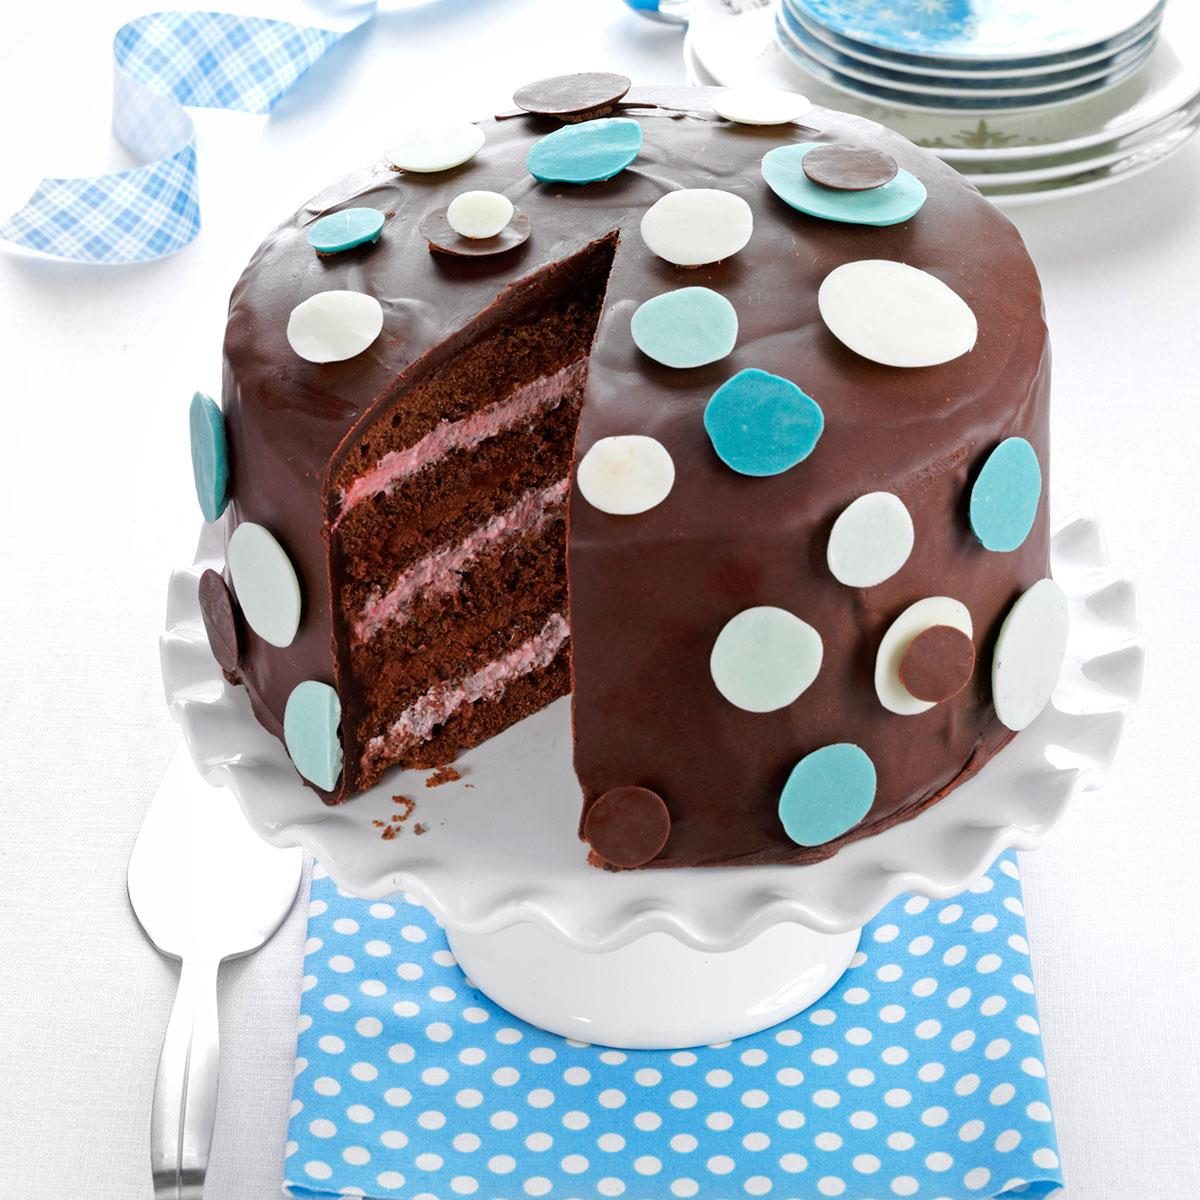 Chocolate-Raspberry Polka Dot Cake